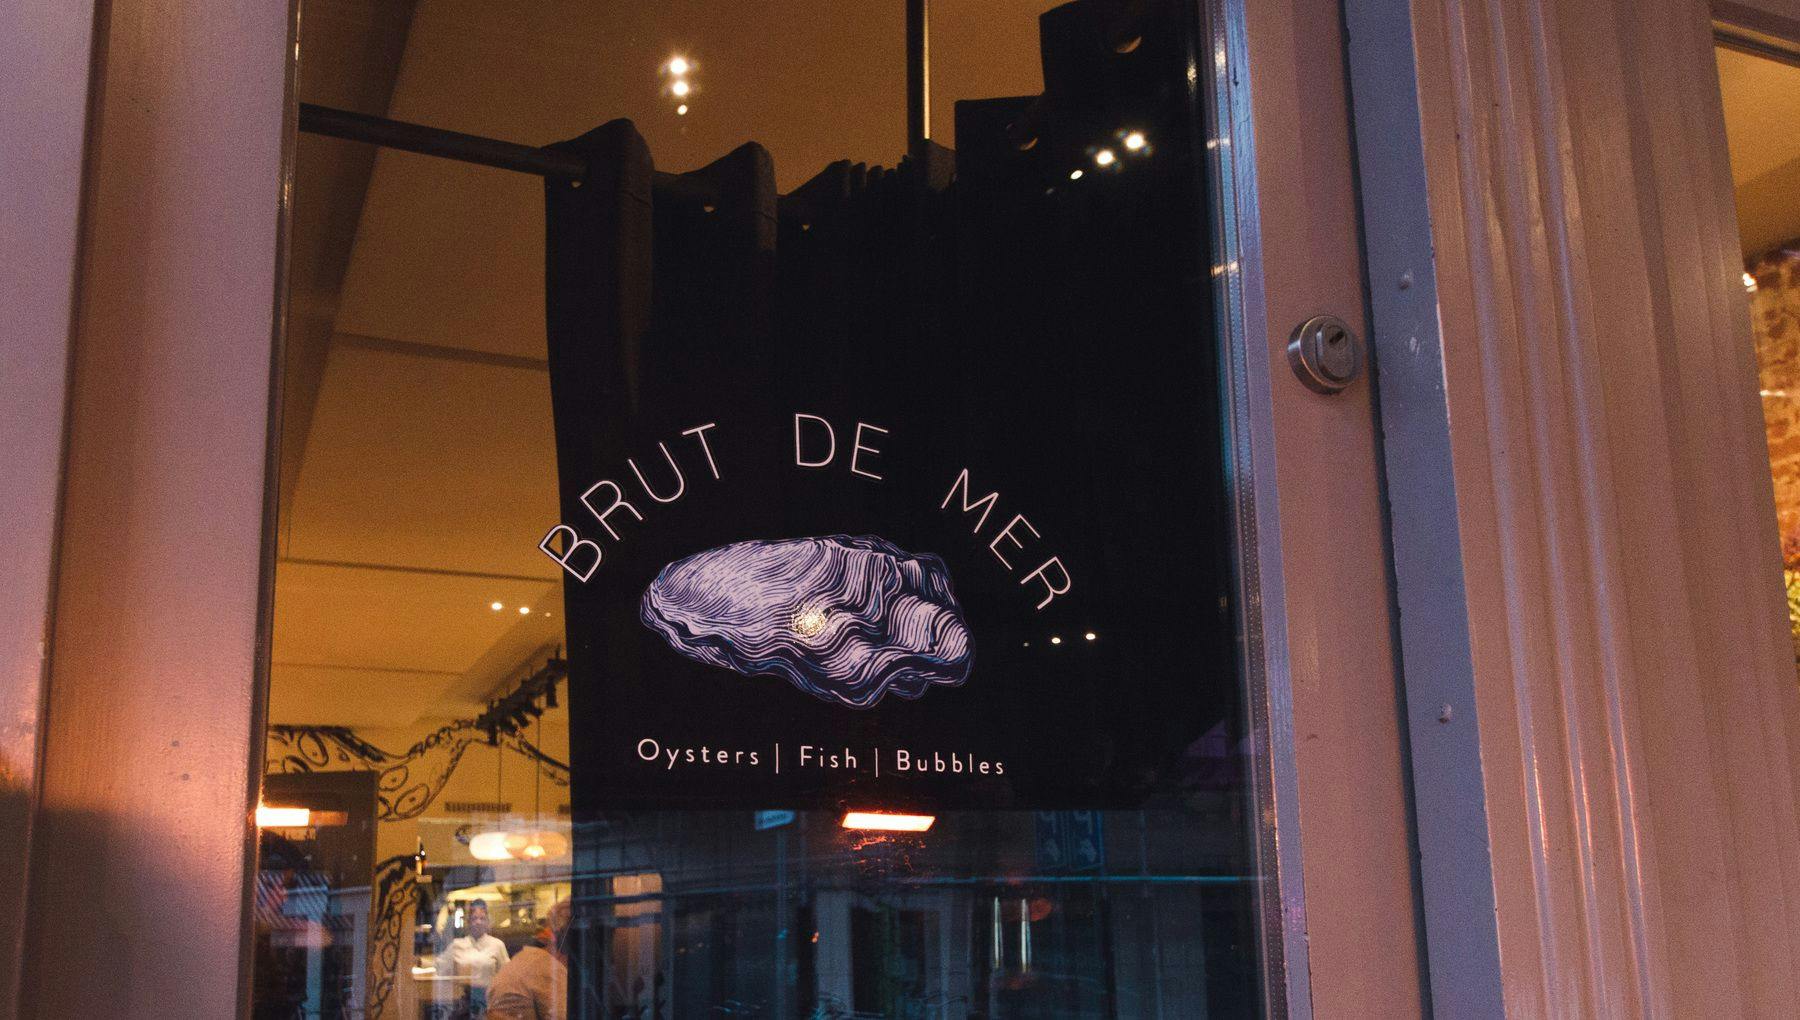 Exterior of Brut de Mer seafood restaurant